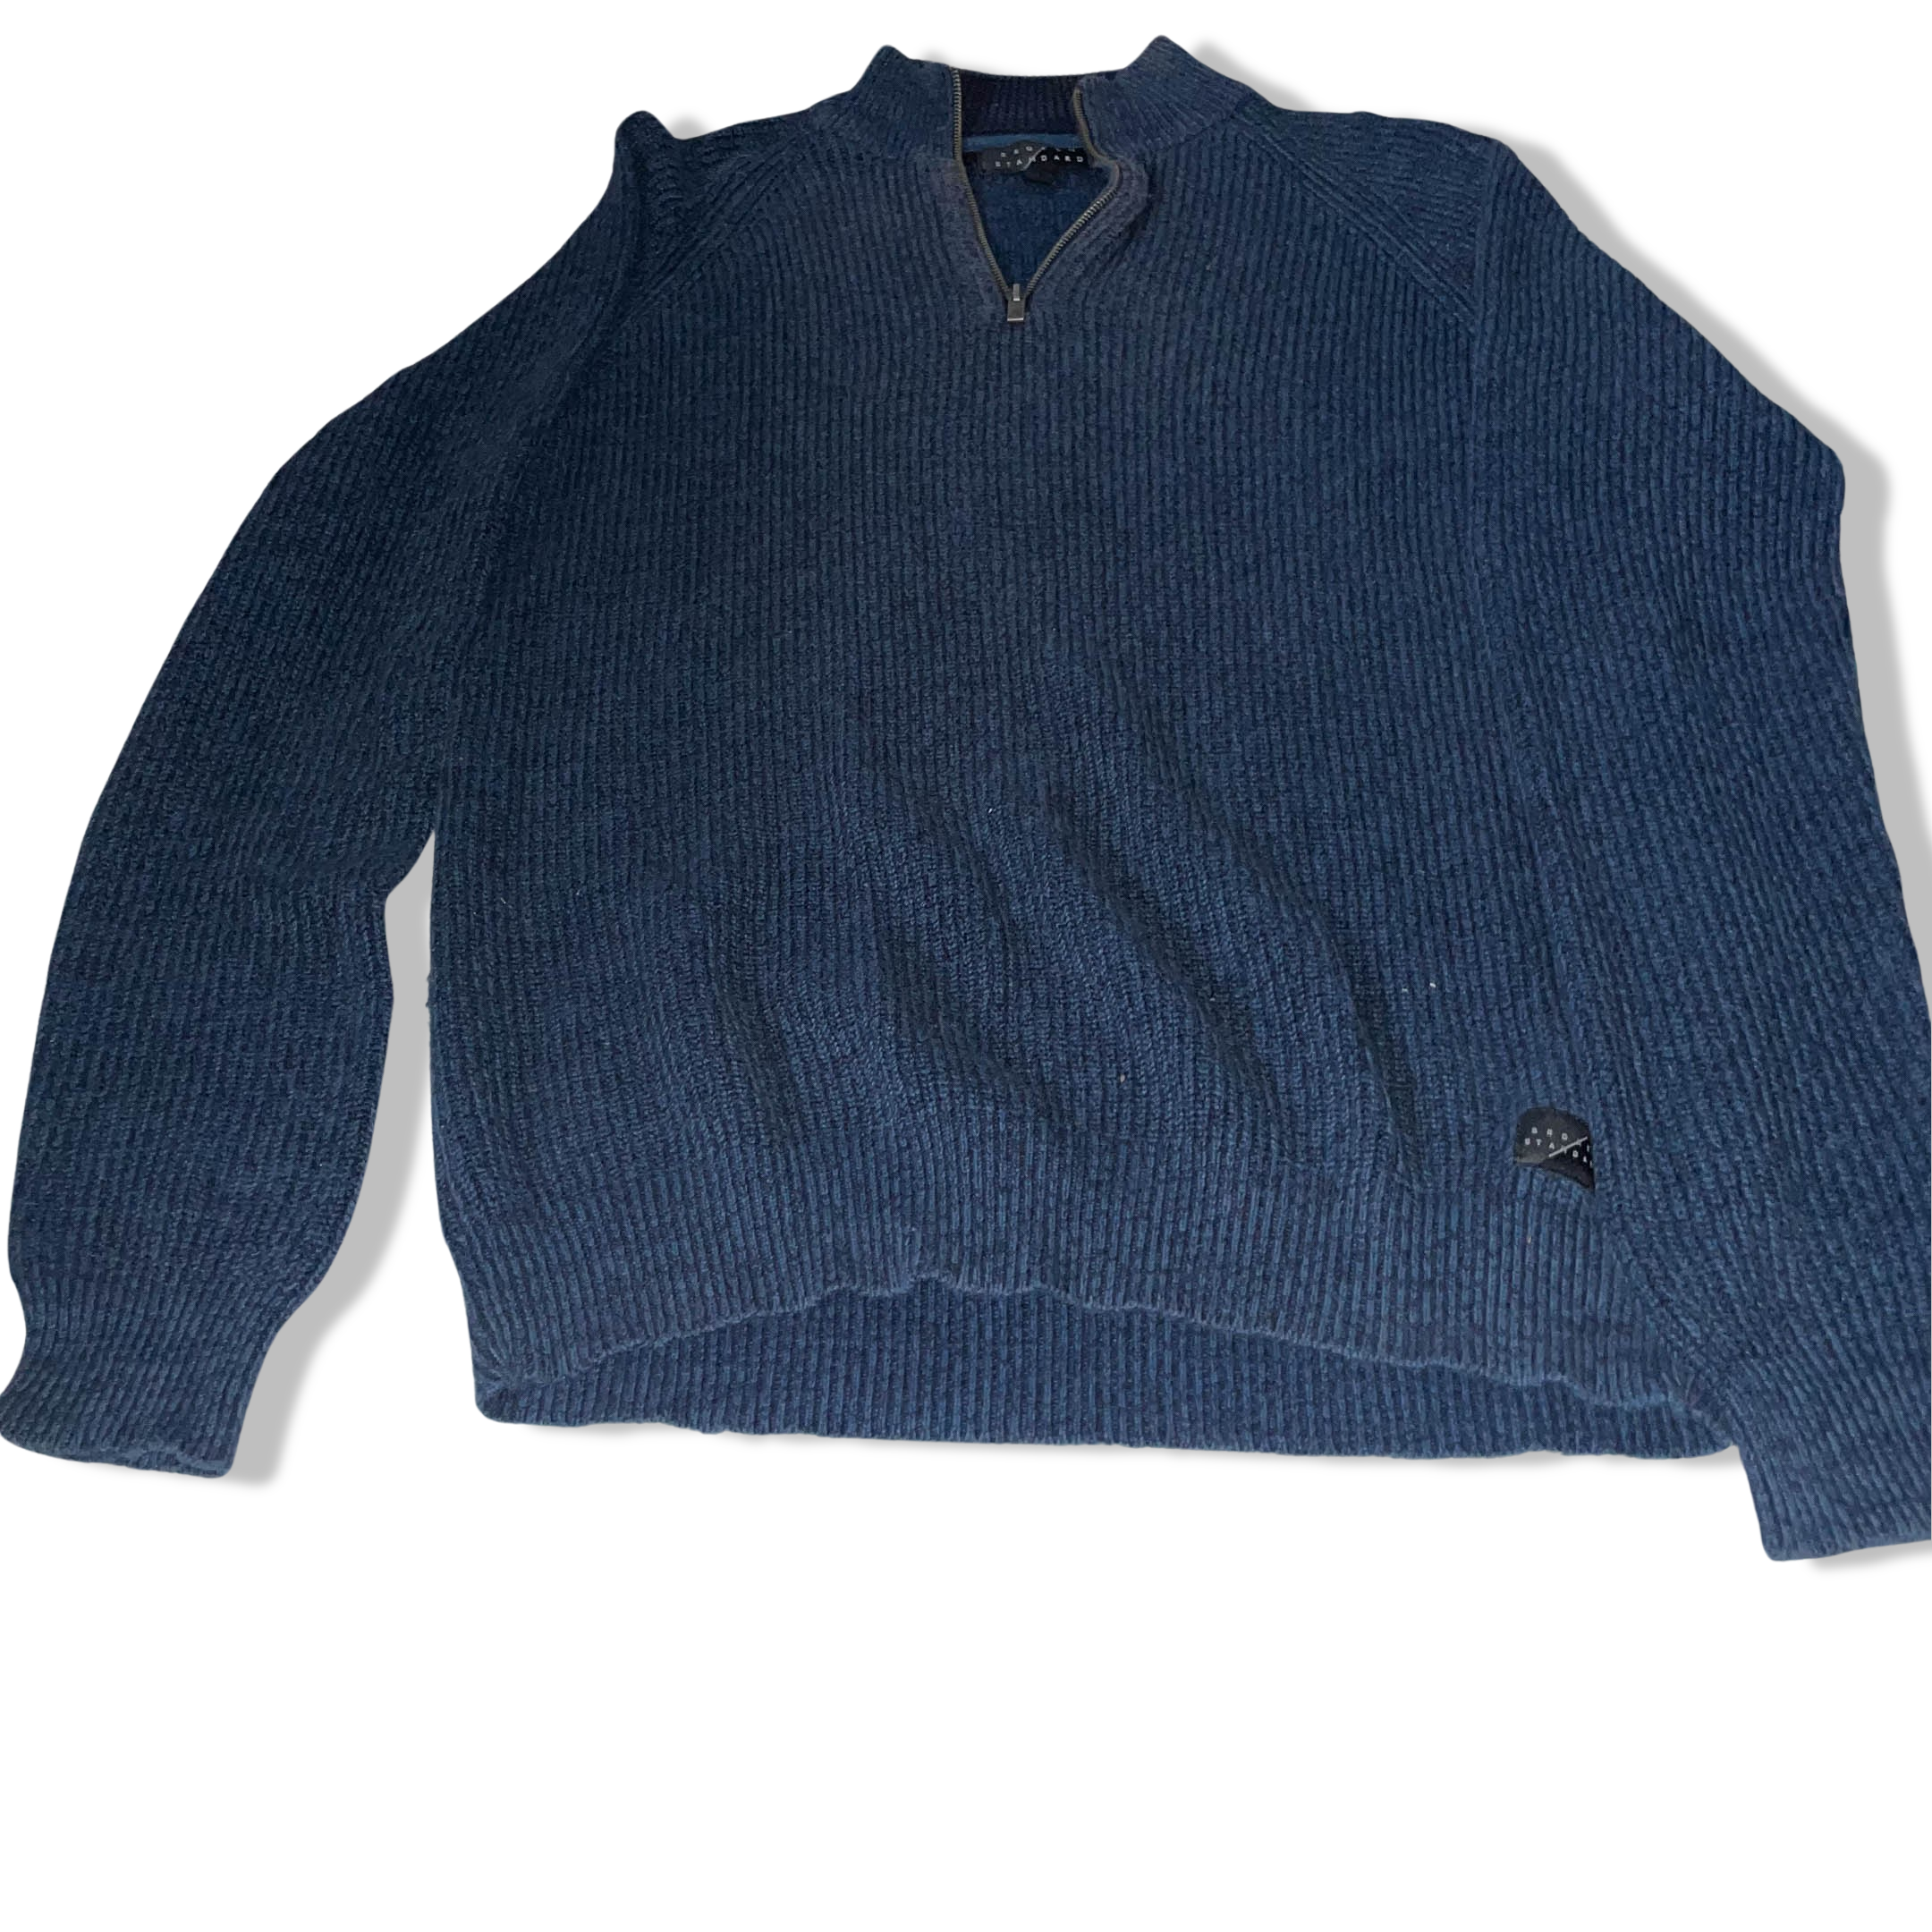 Vintage Broken standard blue knitted 1/4 zip up high neck large sweater